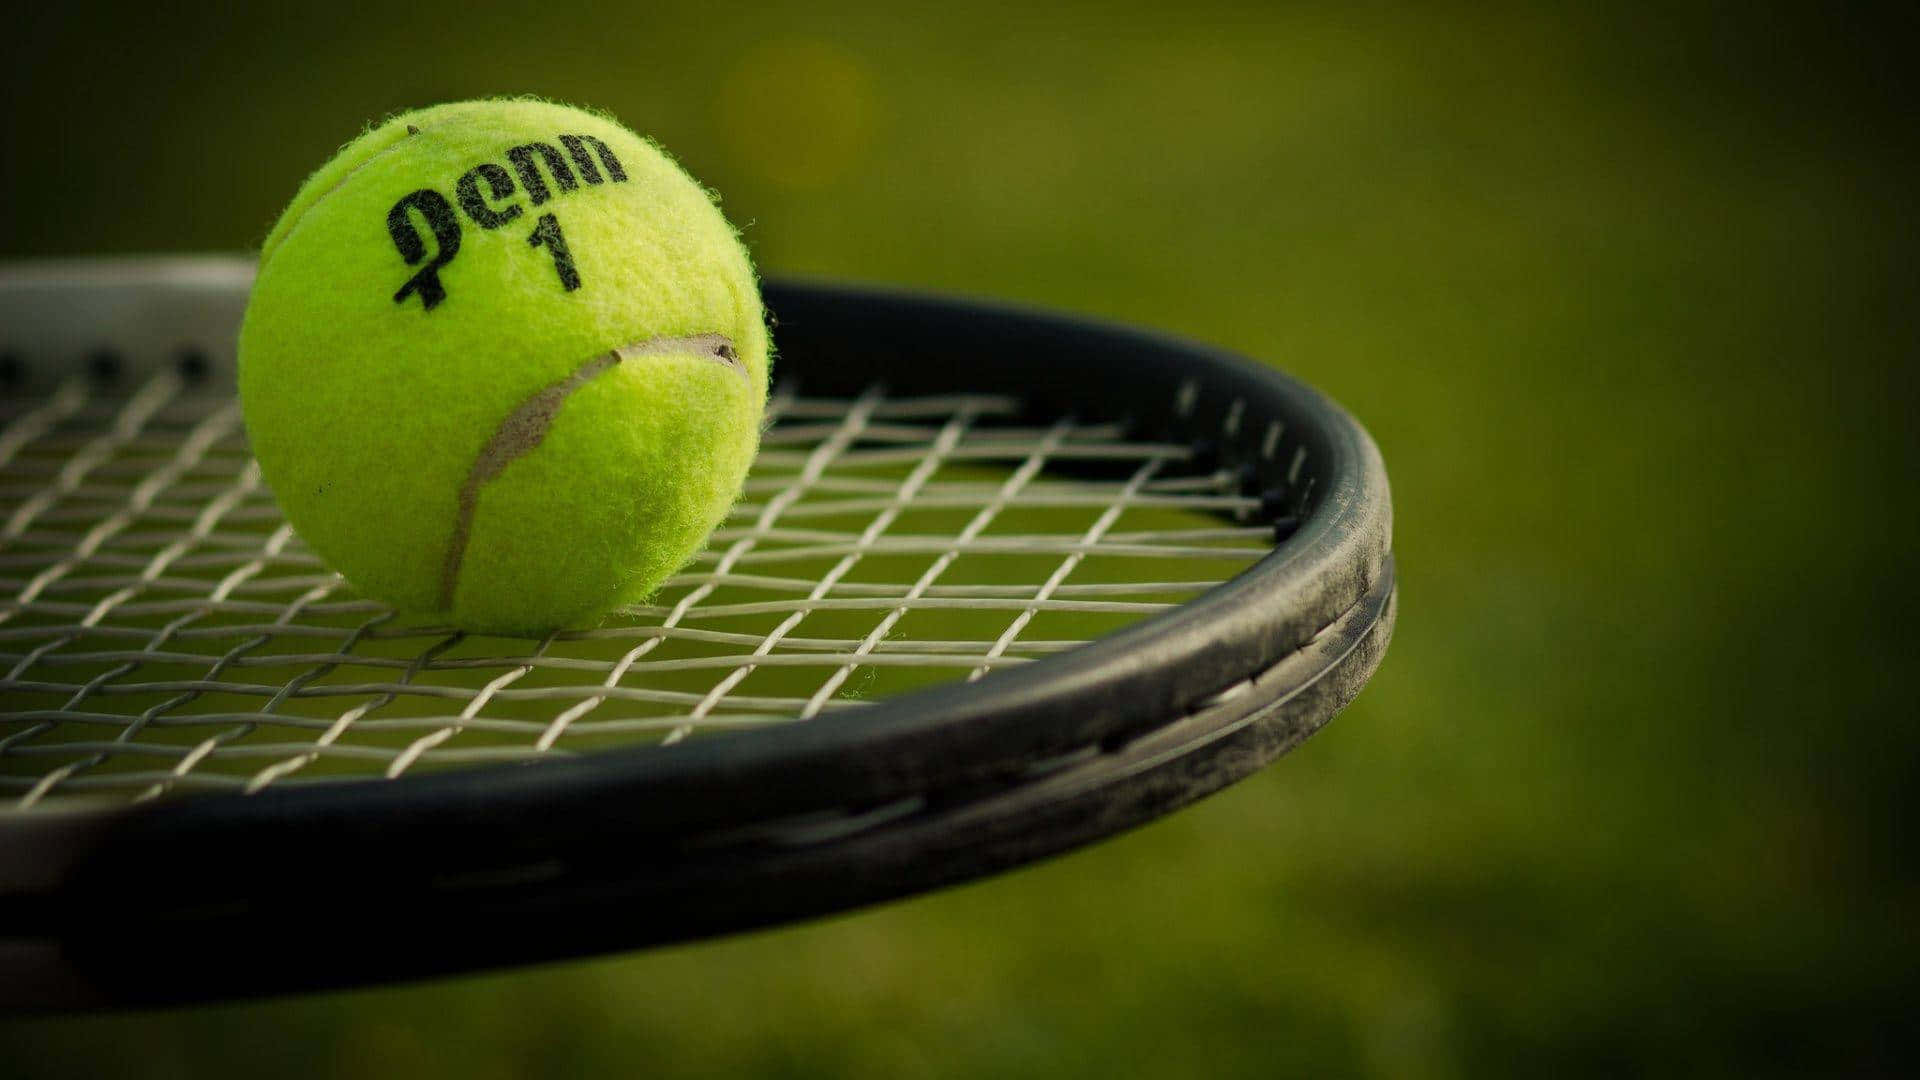 Hd Yellow Tennis Ball On Racket Background